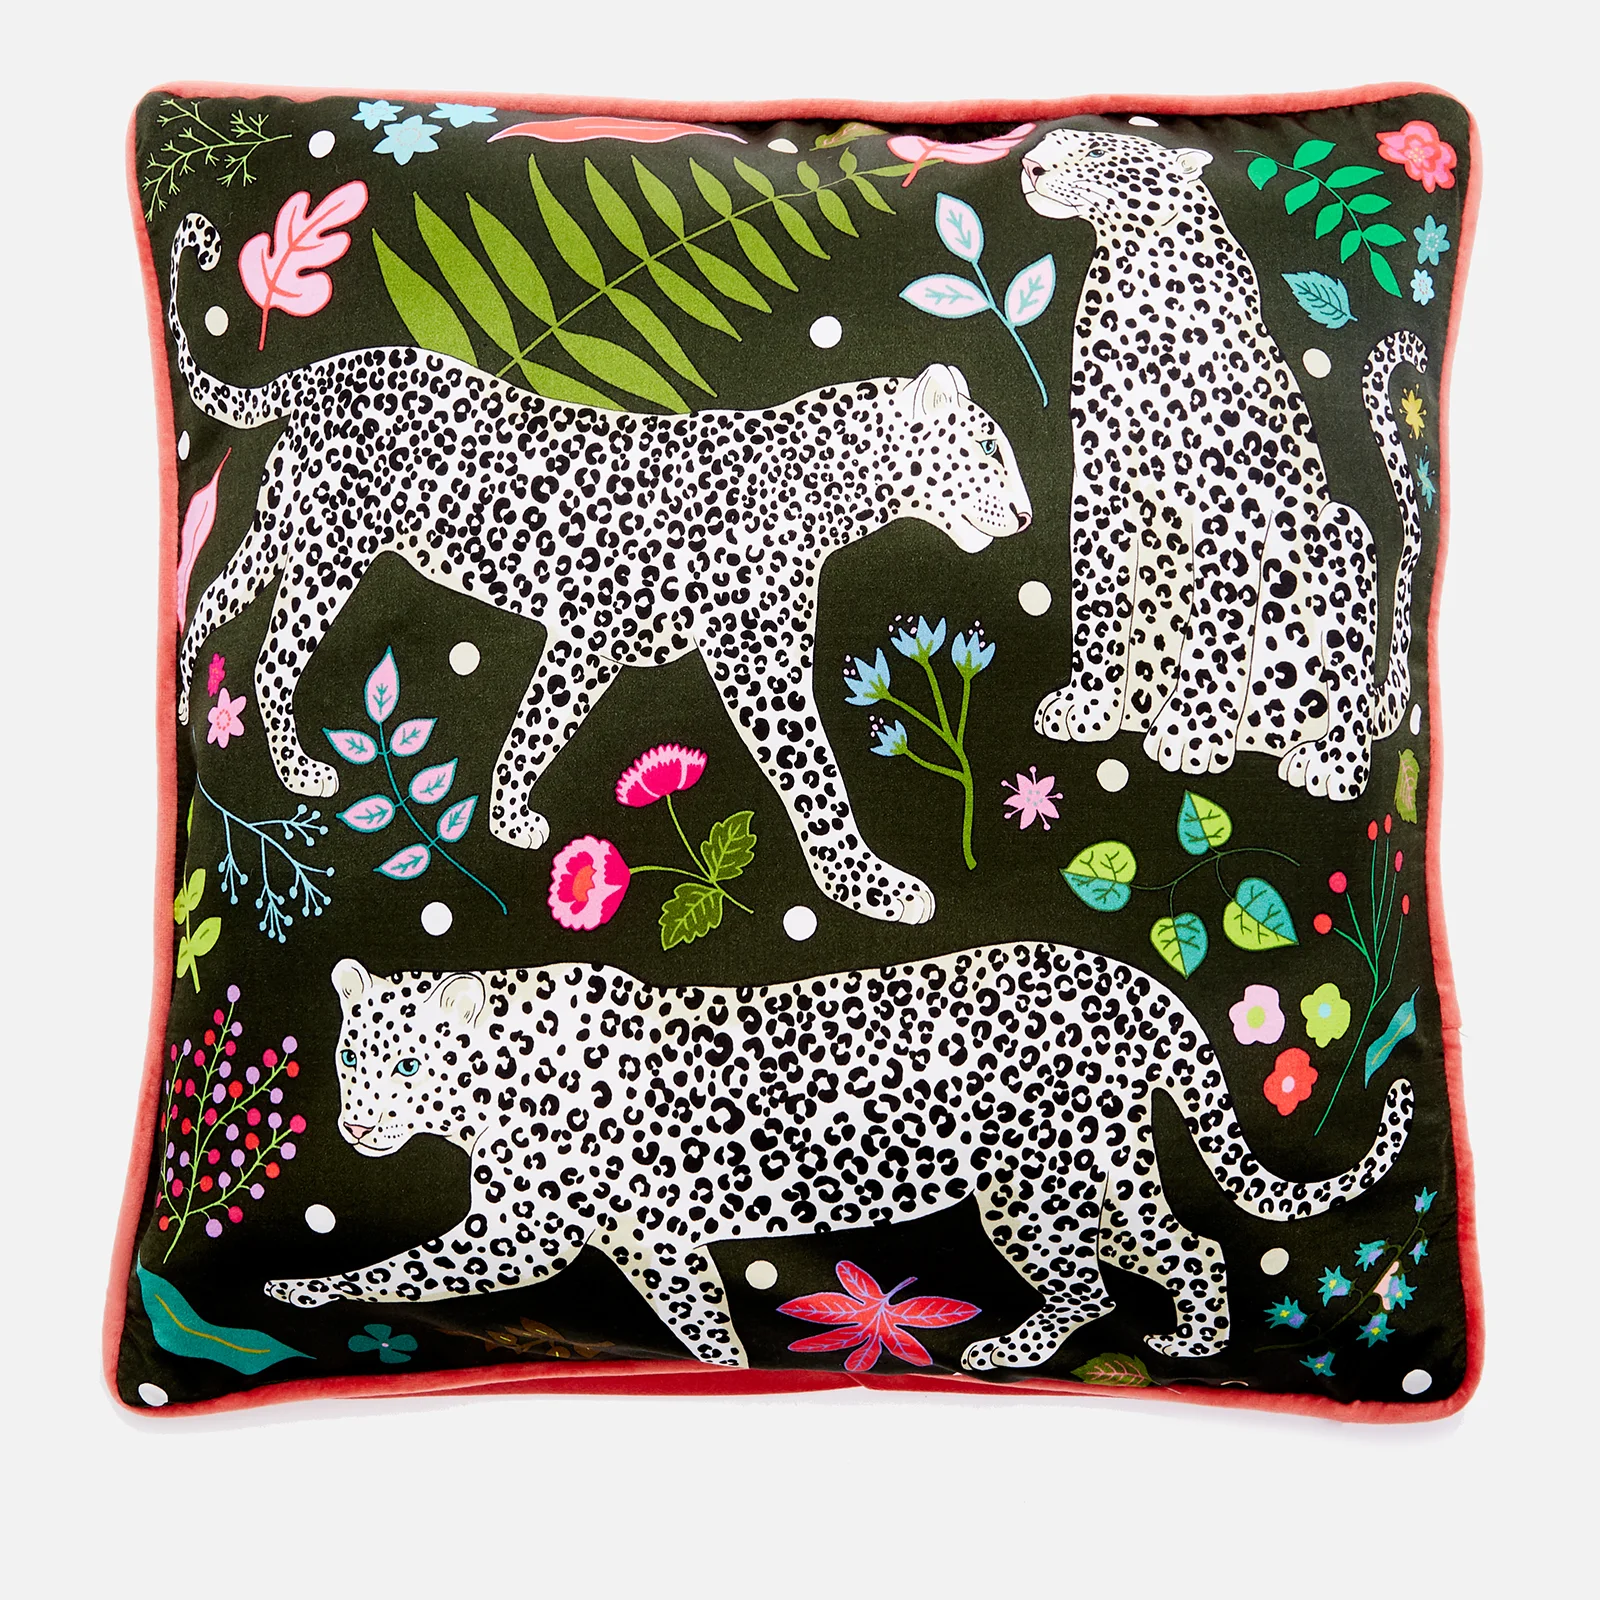 Karen Mabon Snow Leopards Cushion - Green - 45x45cm Image 1